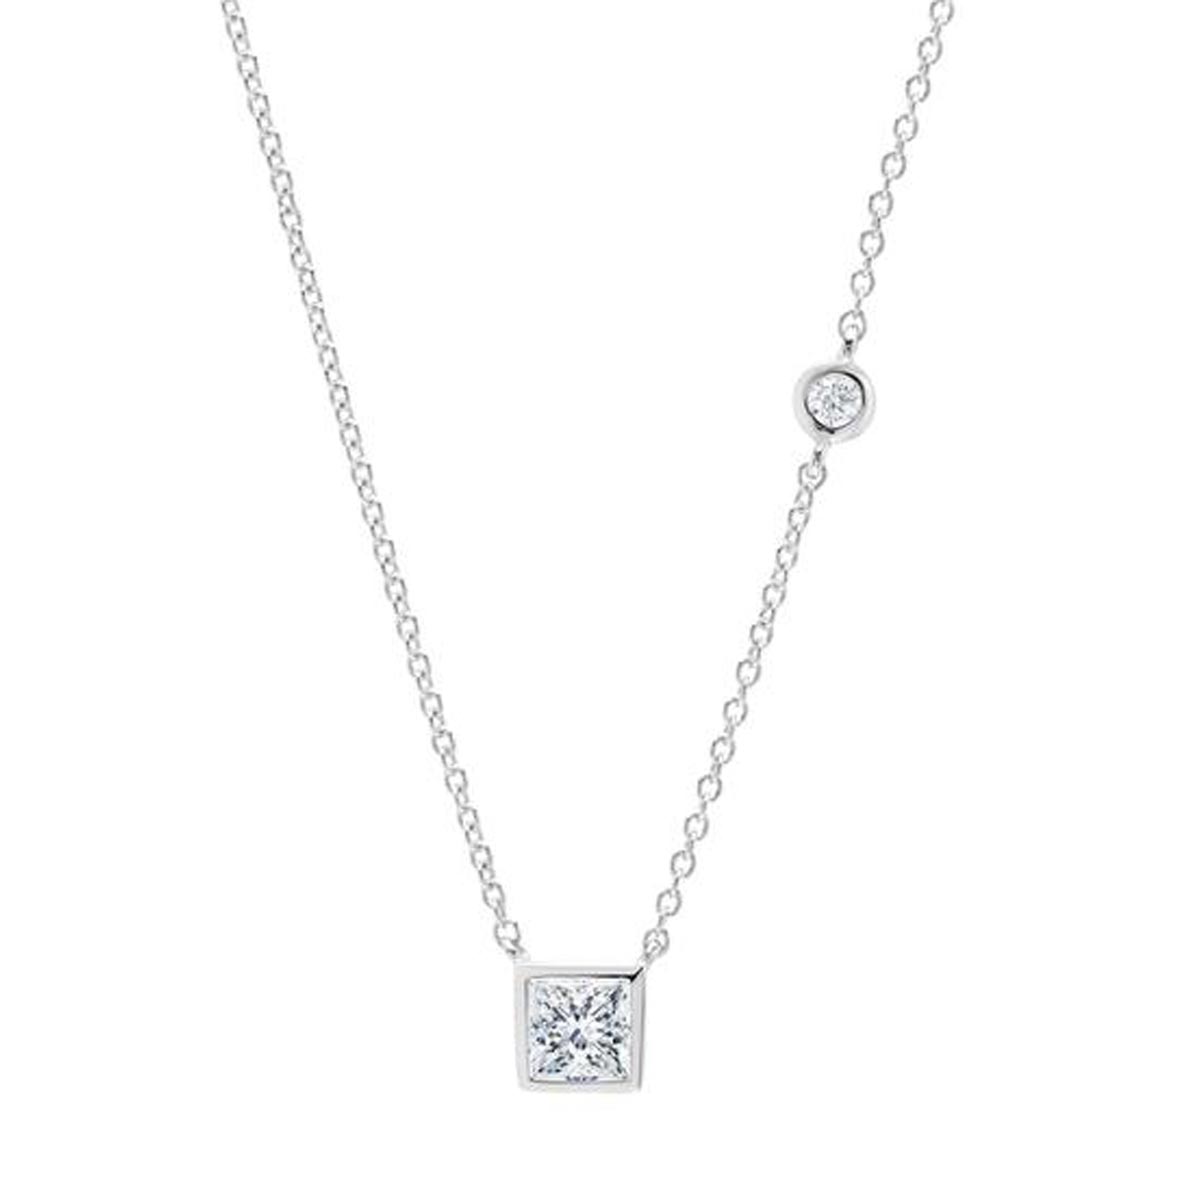 Crislu Cubic Zirconia Princess Cut Bezel Necklace in Sterling Silver with Platinum Finish